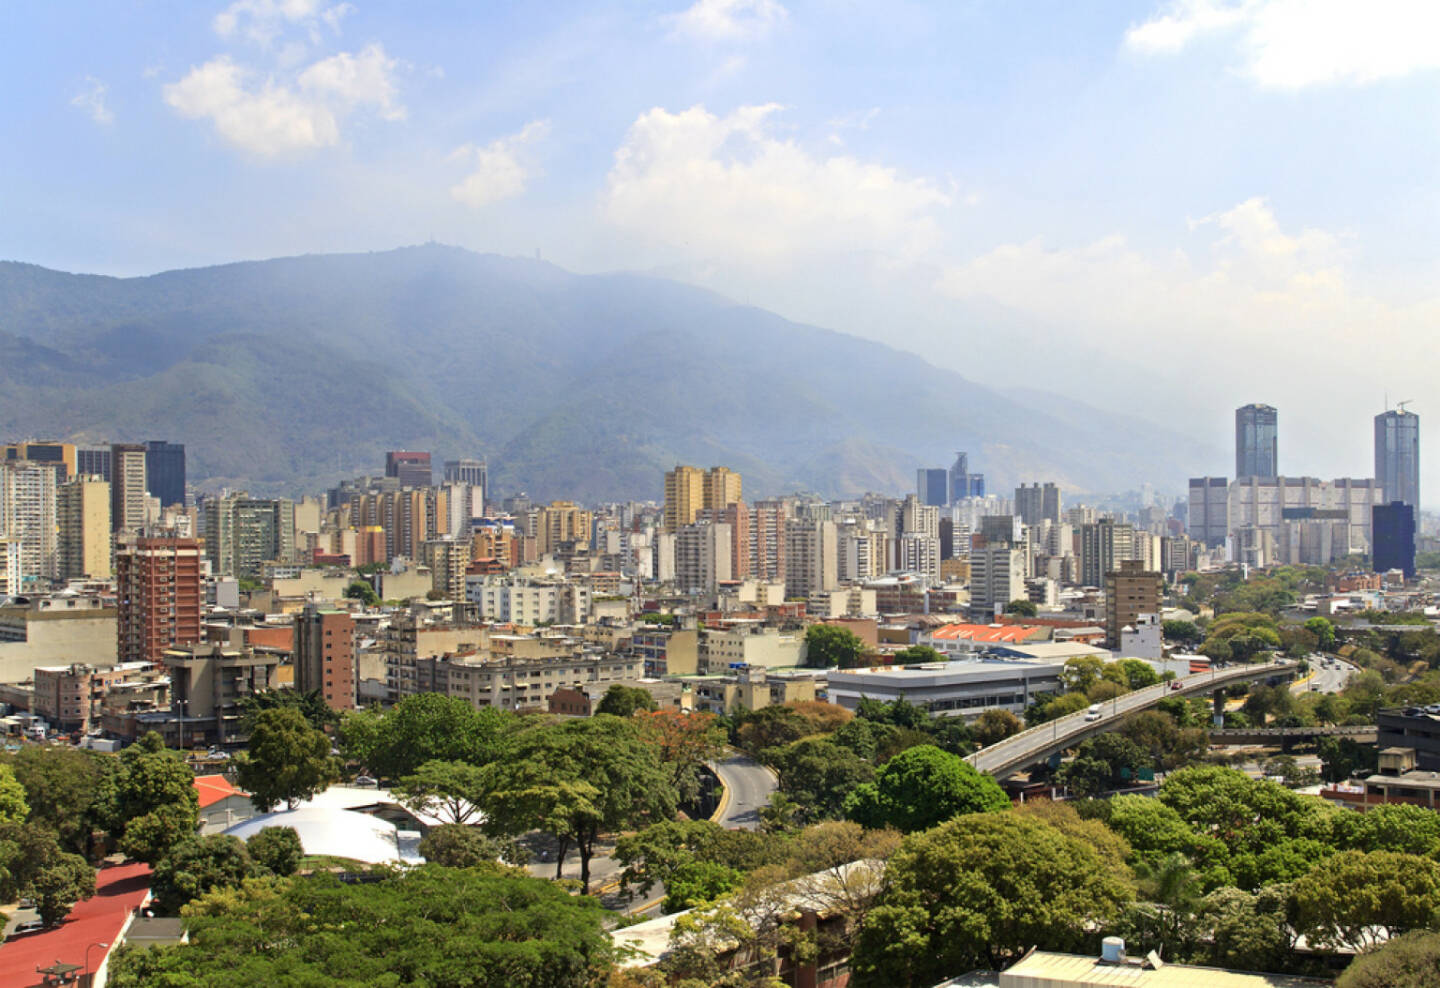 Caracas, Venezuela, http://www.shutterstock.com/de/pic-182034323/stock-photo-skyline-of-caracas-city-capital-of-venezuela.html